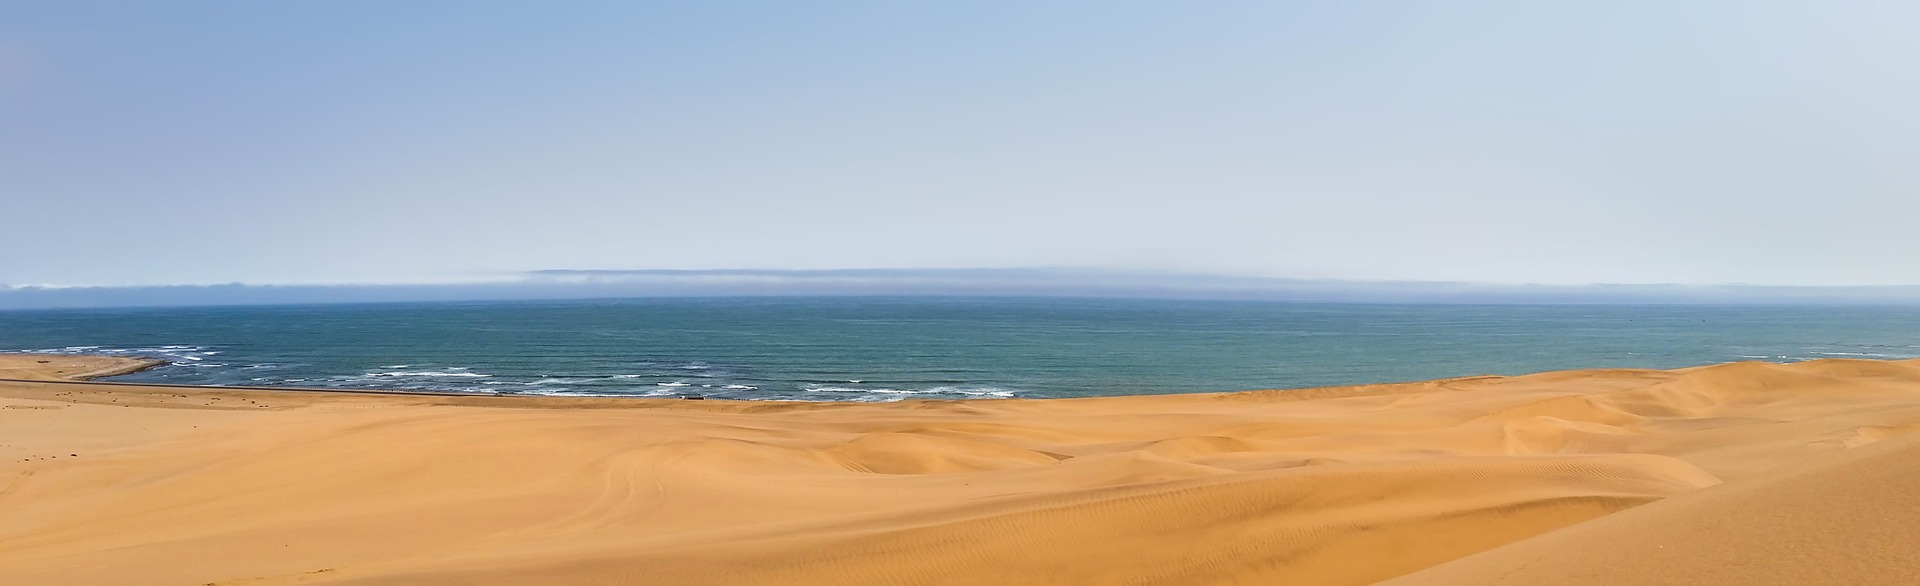 Namibia Strand Atlantikküste Meer